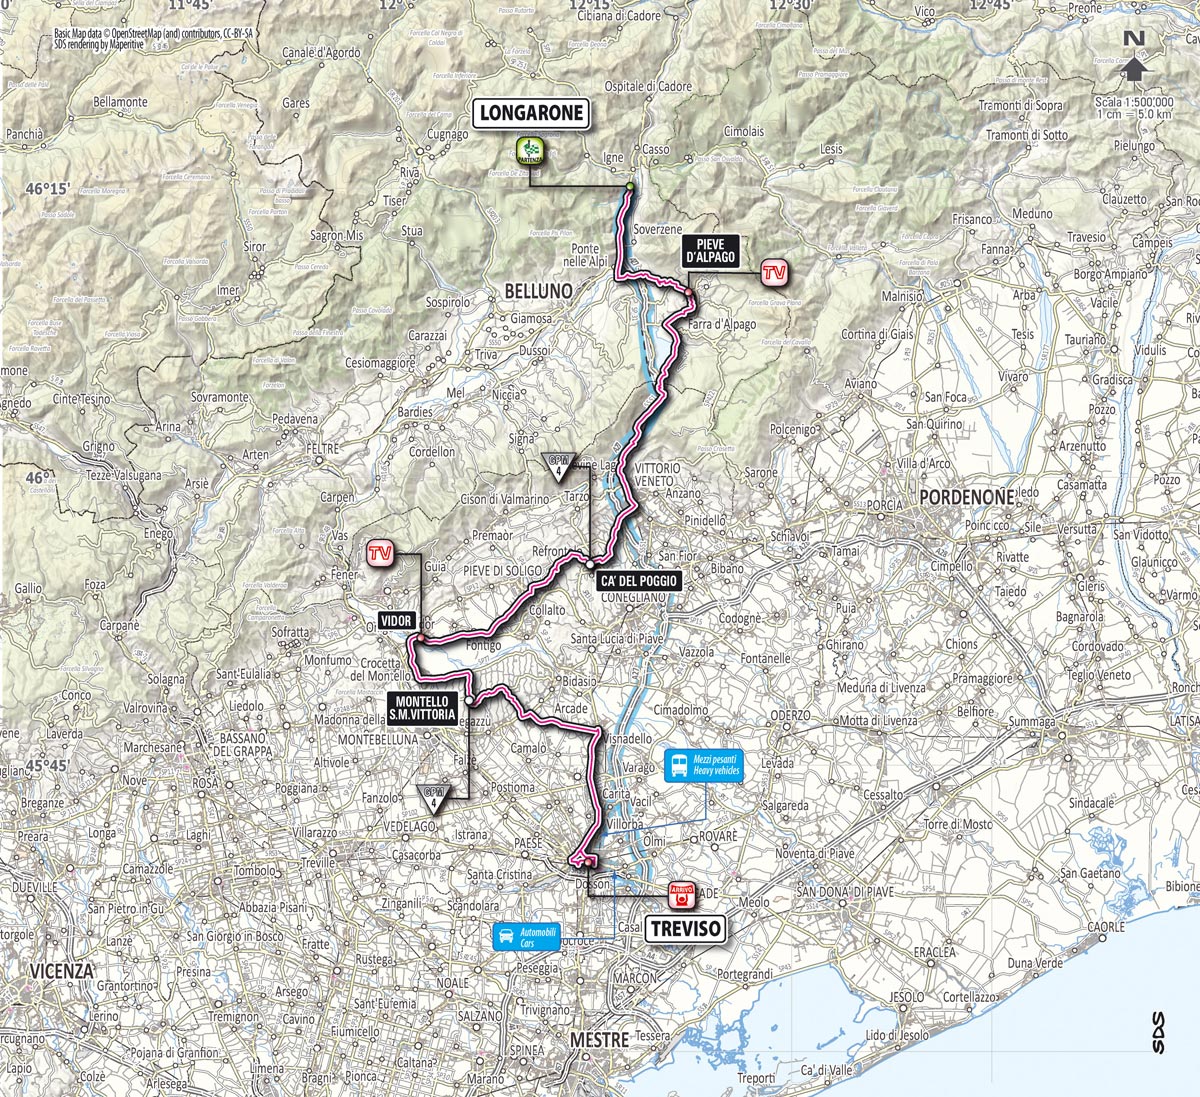 Giro d'Italia 2013 stage 12 map